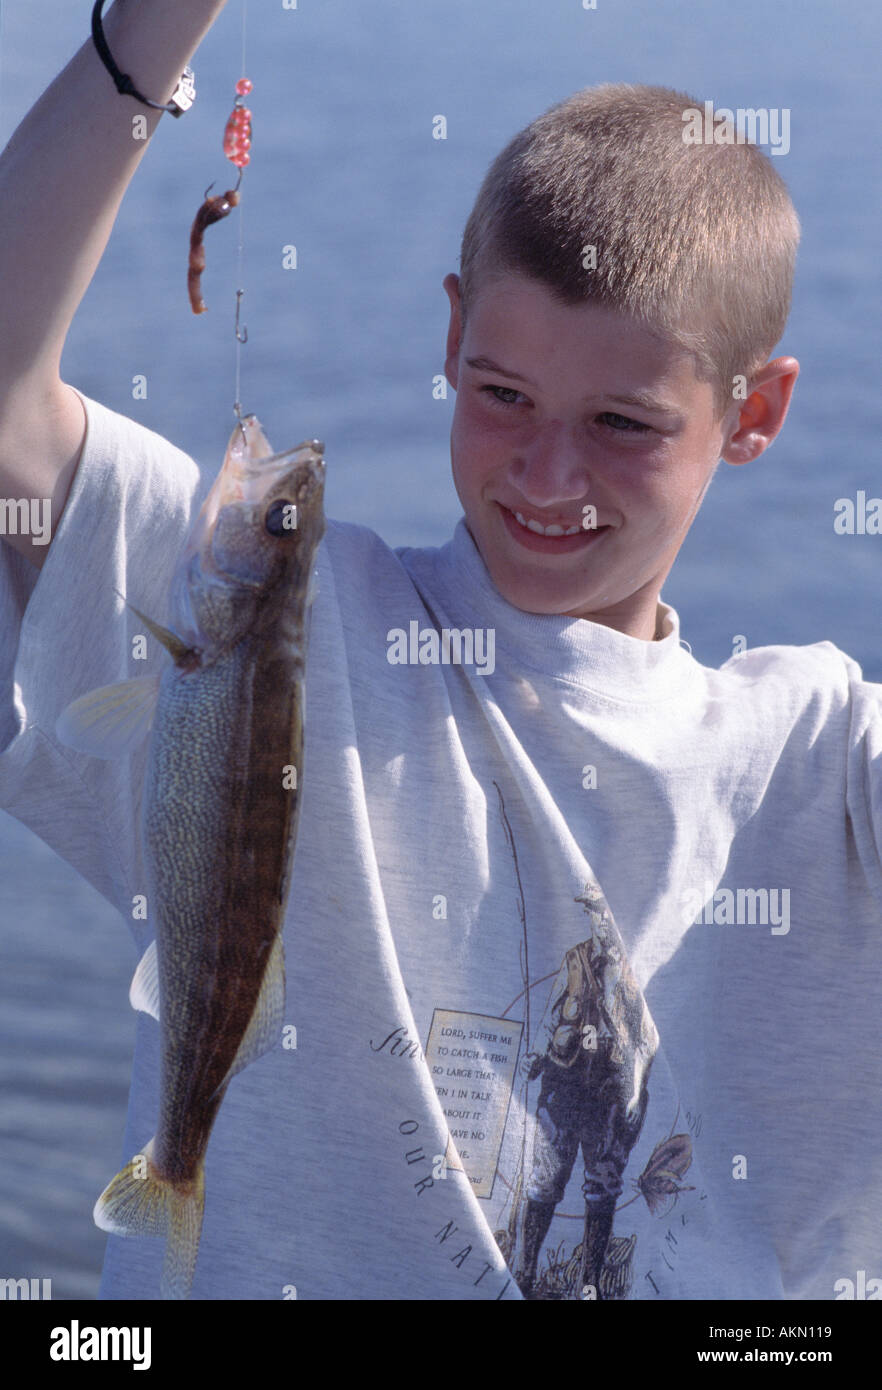 Boy with Walleye fish Stock Photo